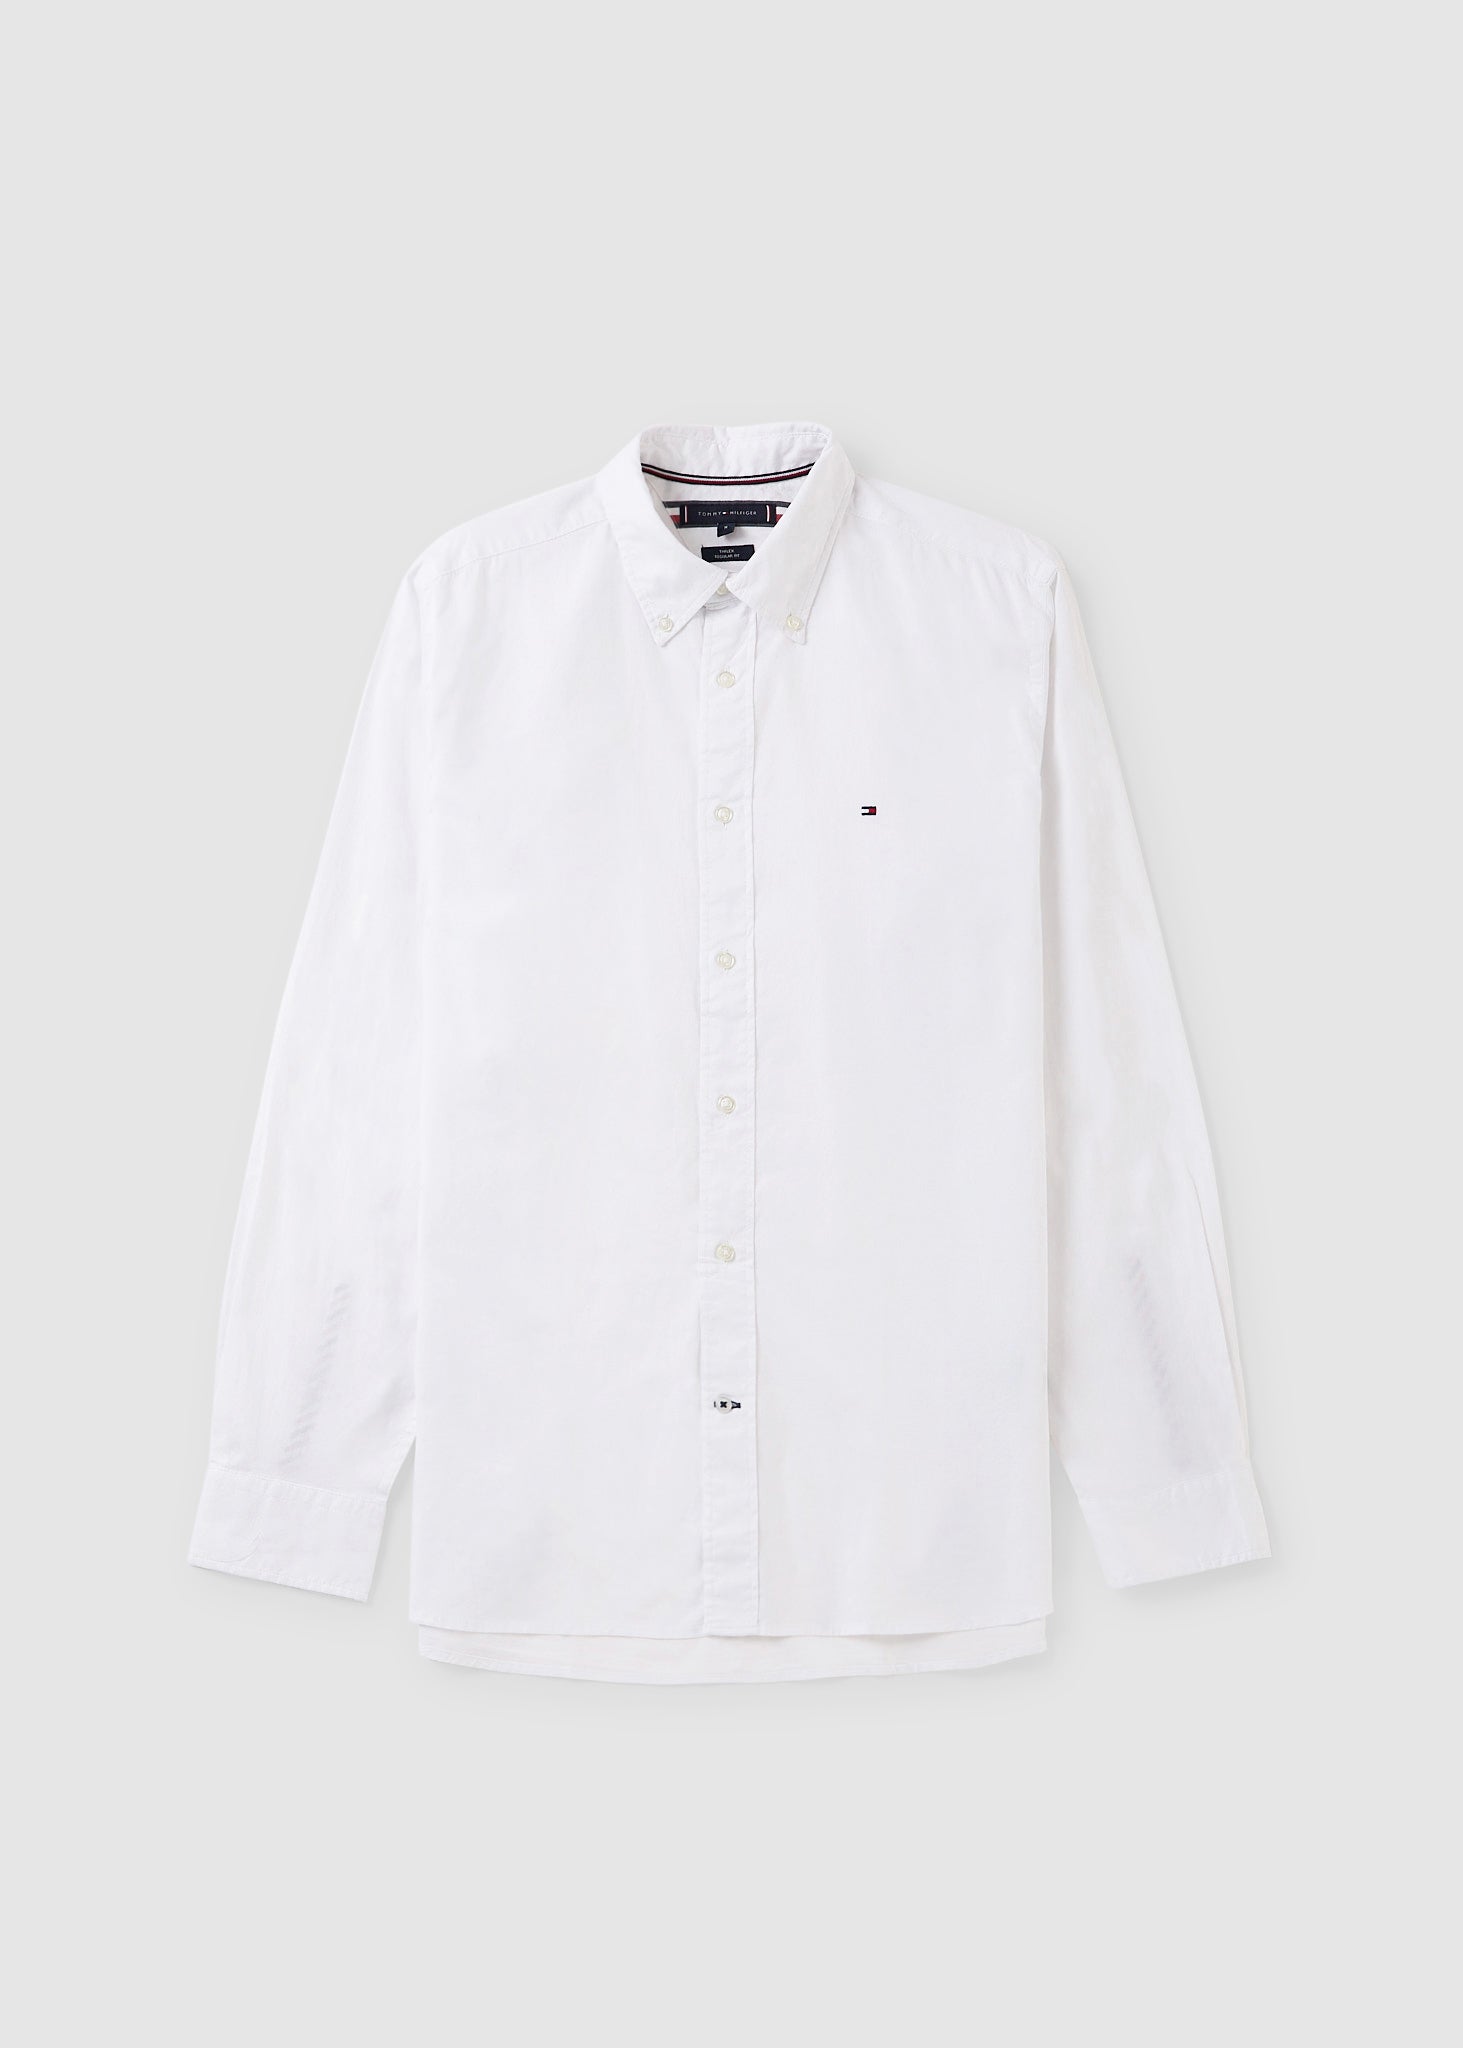 Image of Tommy Hilfiger Mens Core Flex Poplin Rf Shirt In White